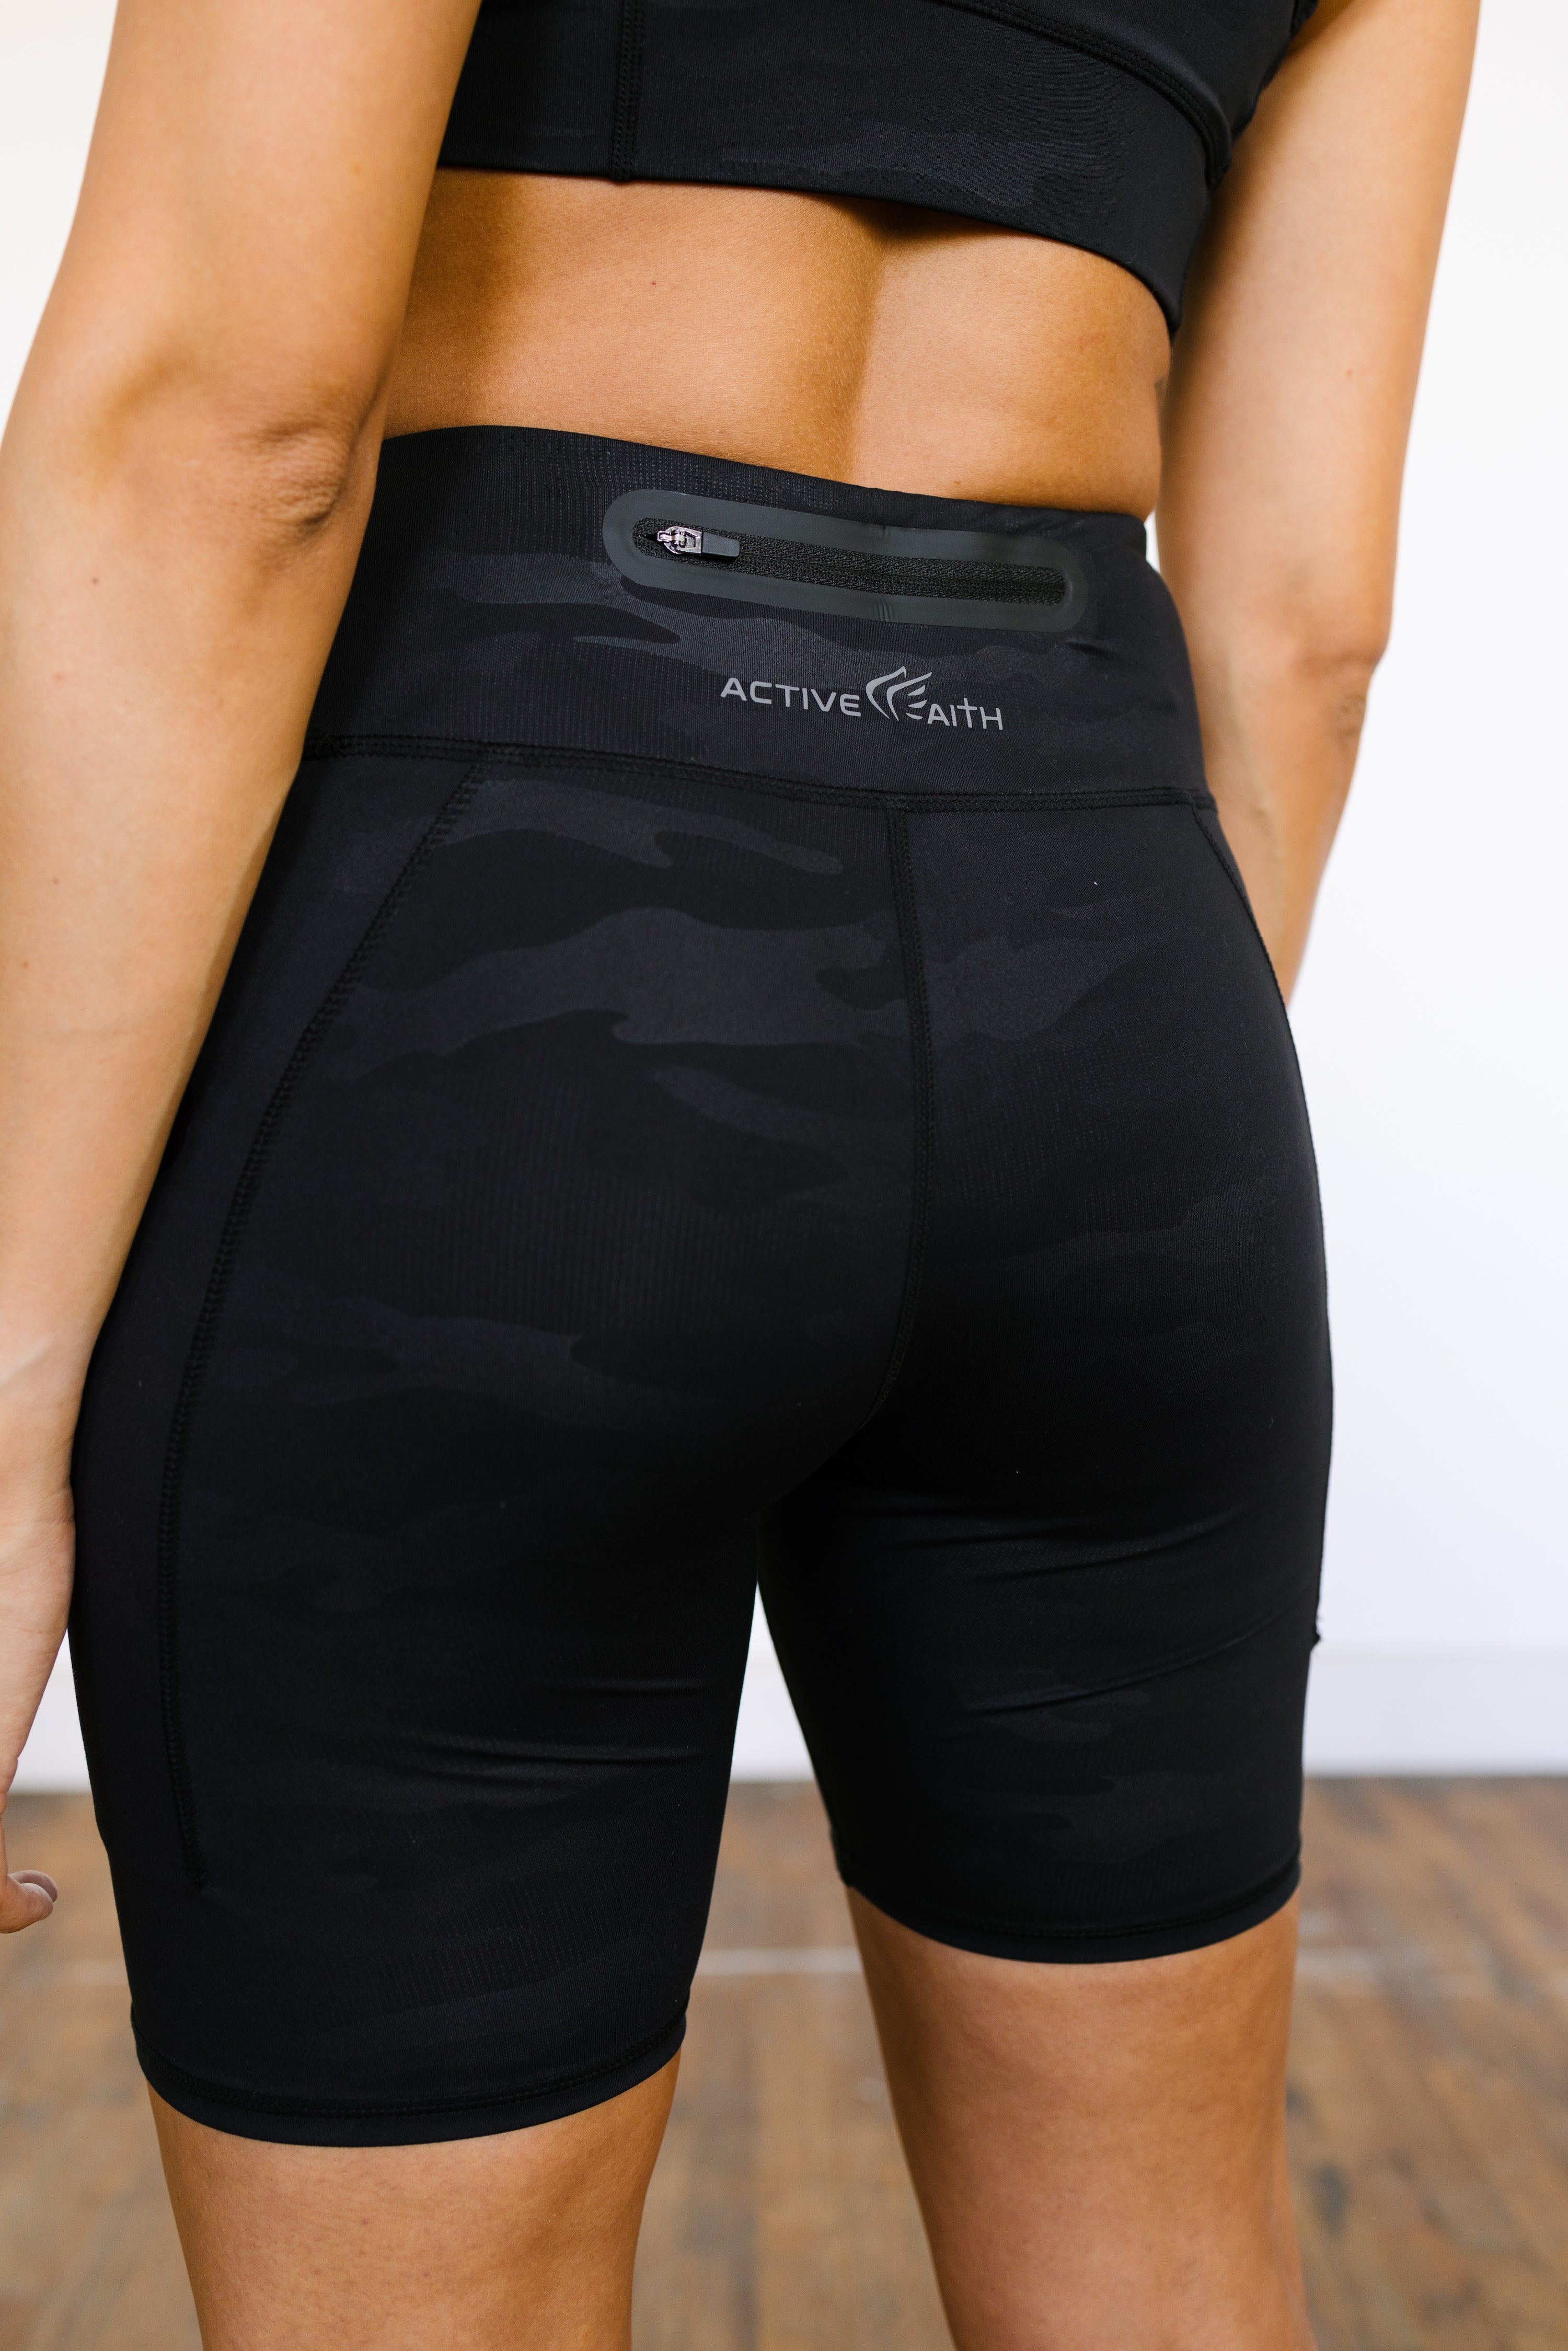 Women's "Active Faith" Camo Biker Shorts